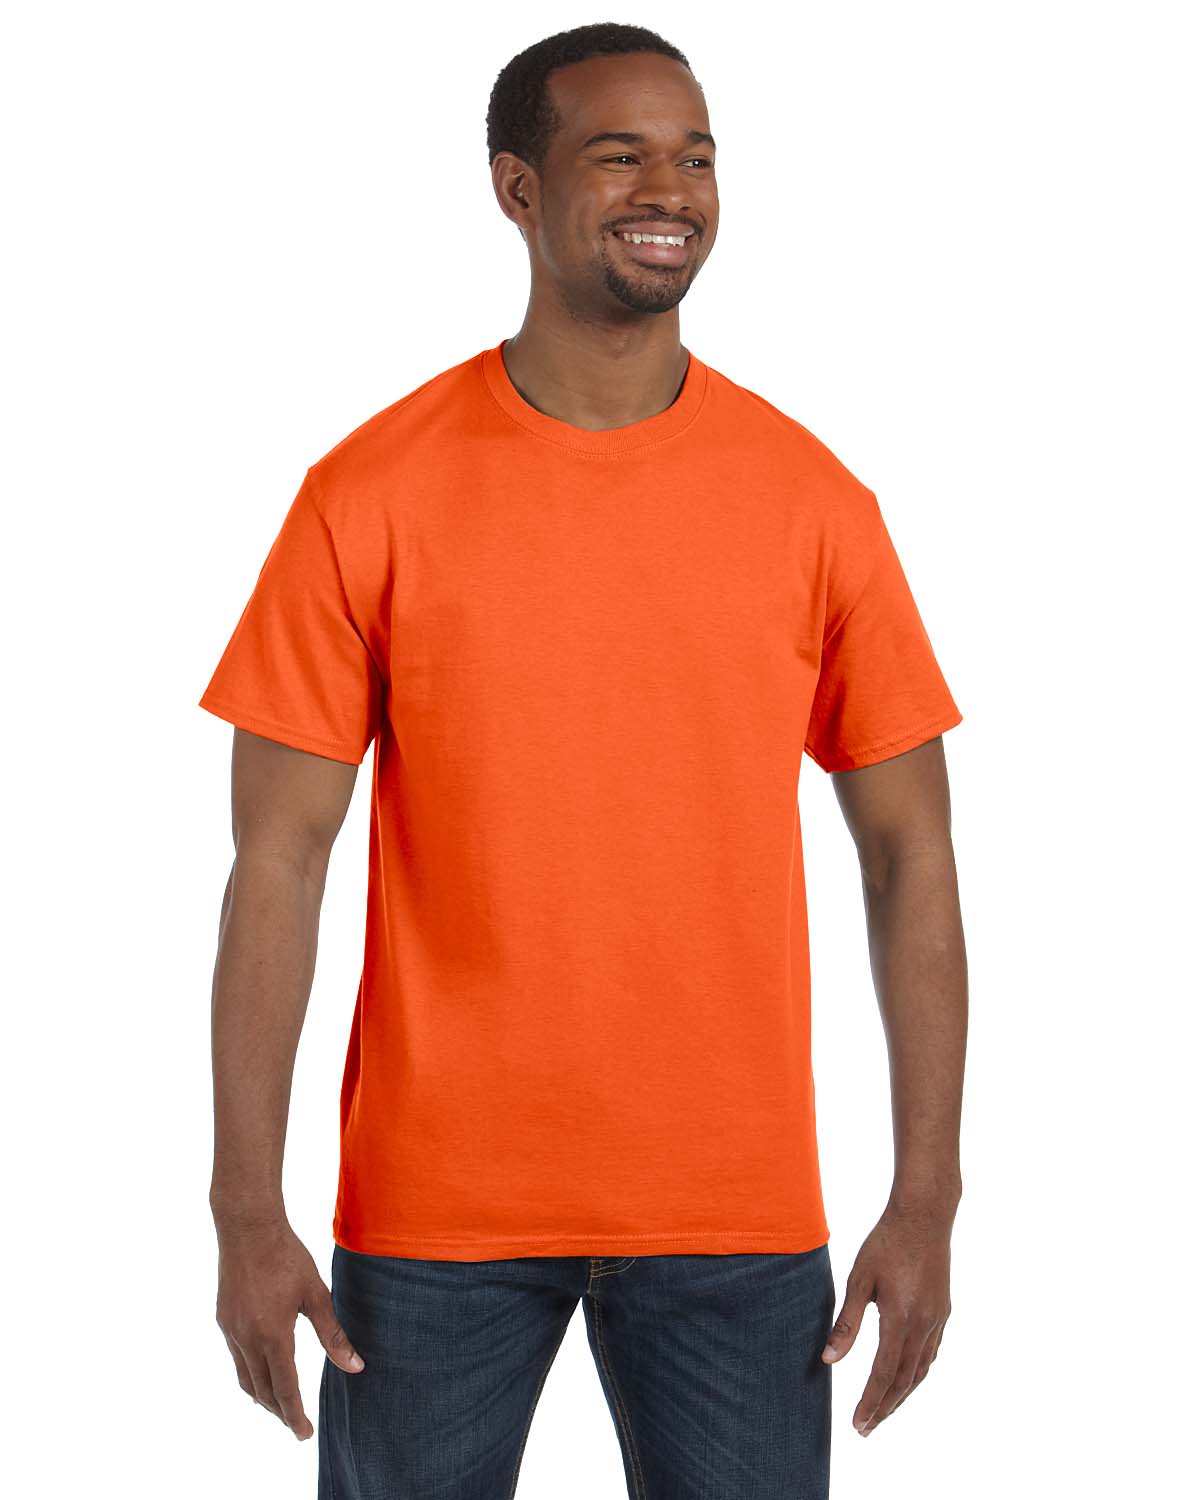 100 Custom Crew Neck T-Shirts Standard Quality $400 SALE (Bulk) (Unisex)